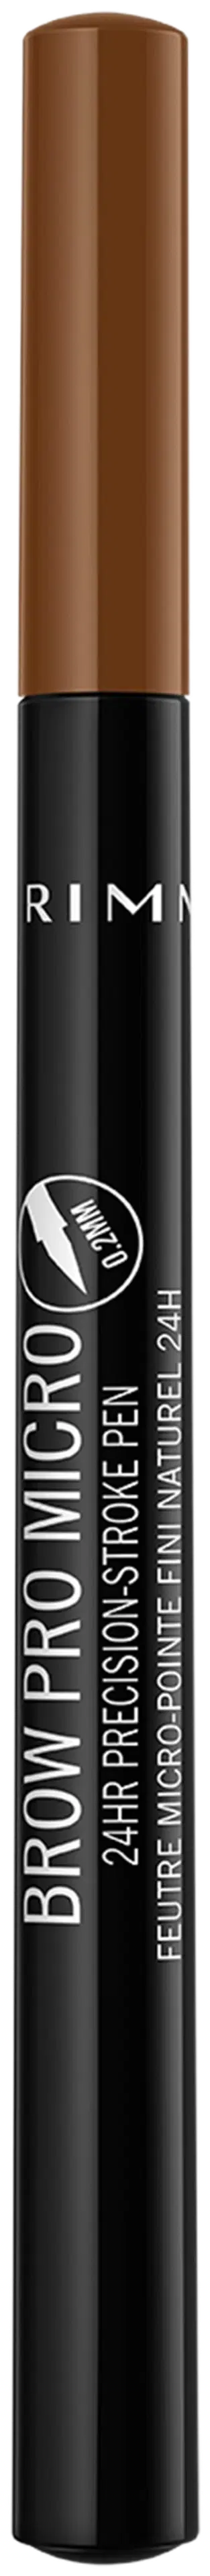 Rimmel Brow Pro 24HR Precision-Stroke kulmakynä 1 ml, 002 Honey Brown